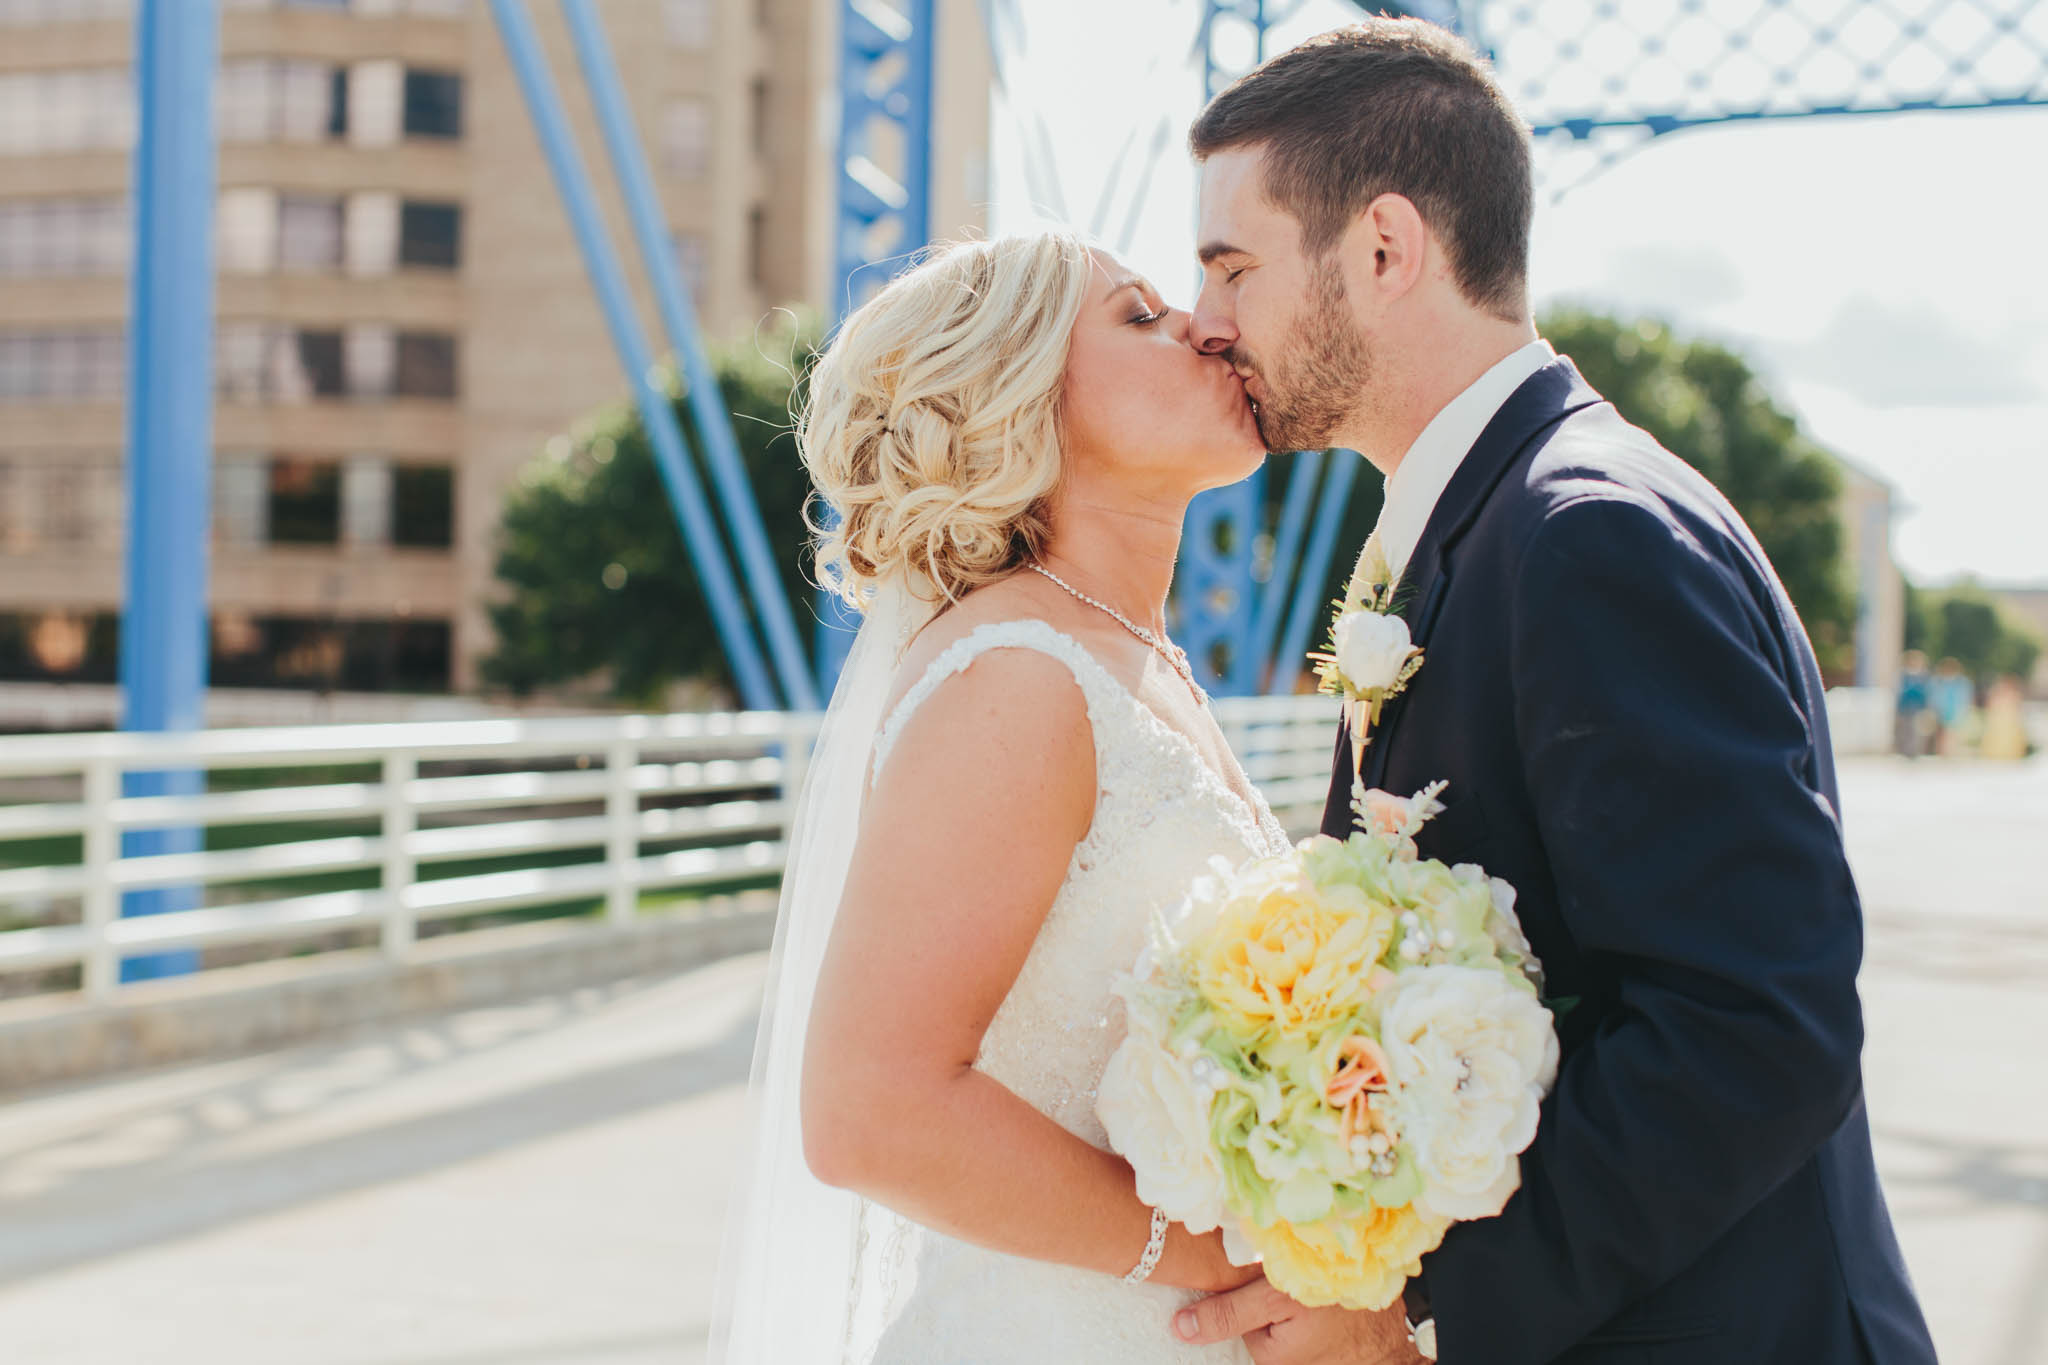 Jillian VanZytveld Photography - Grand Rapids Lifestyle Wedding Photography - 113.jpg